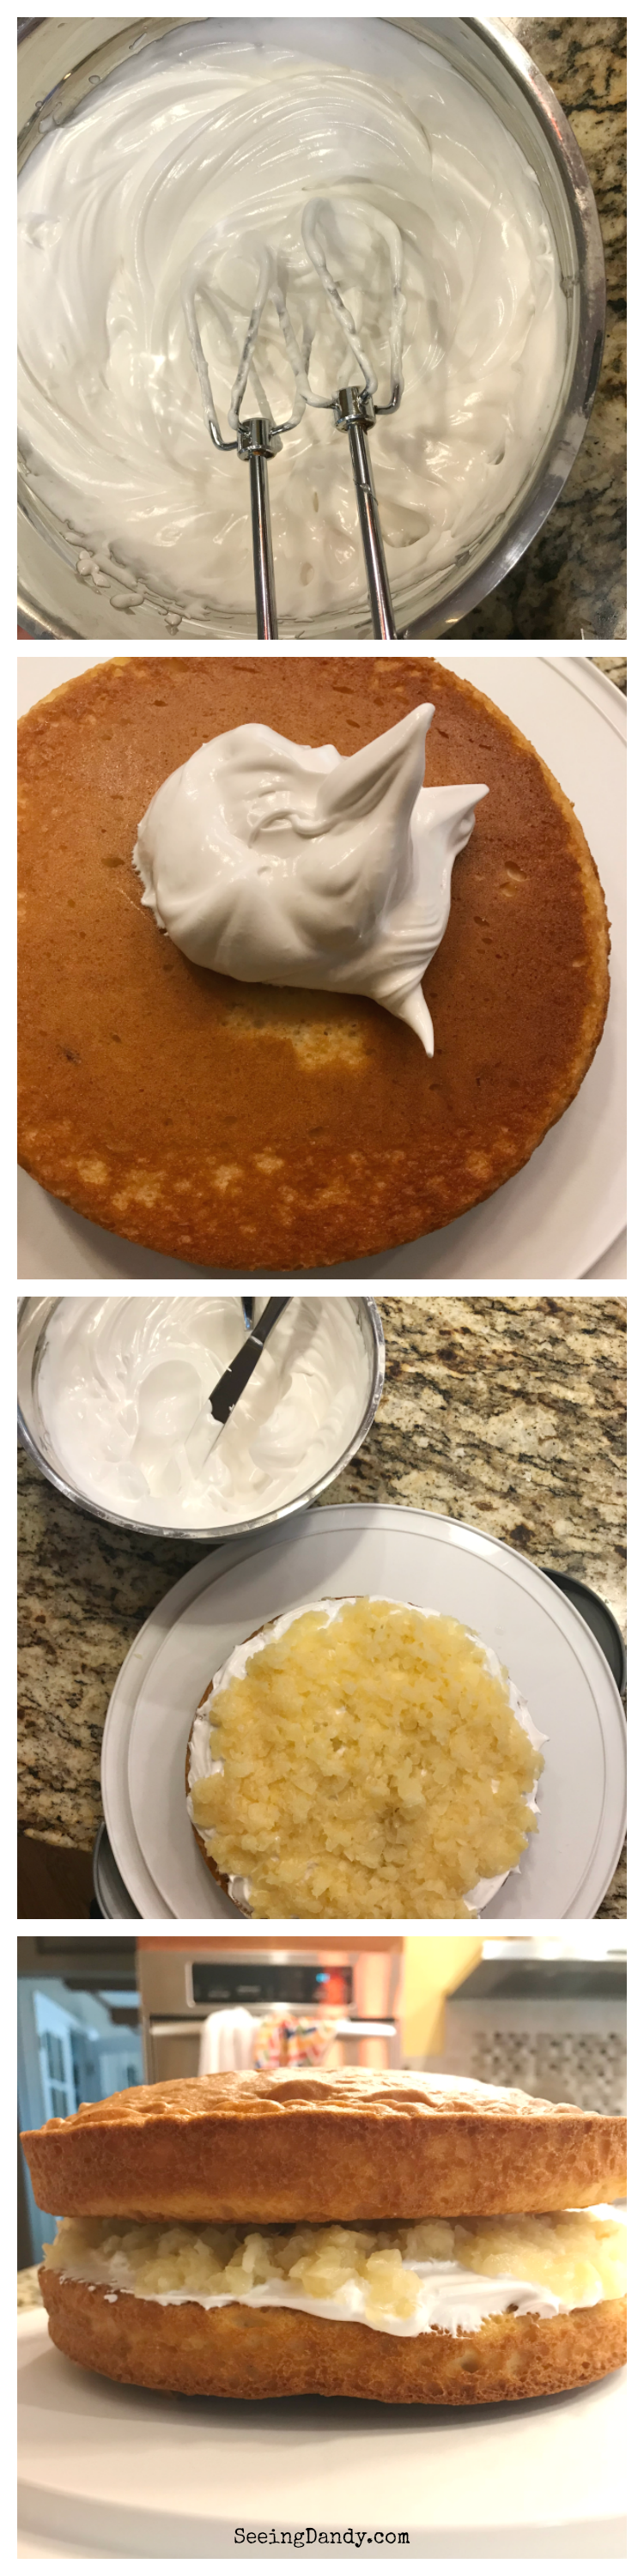 Cream of tartar icing for pineapple coconut cake.